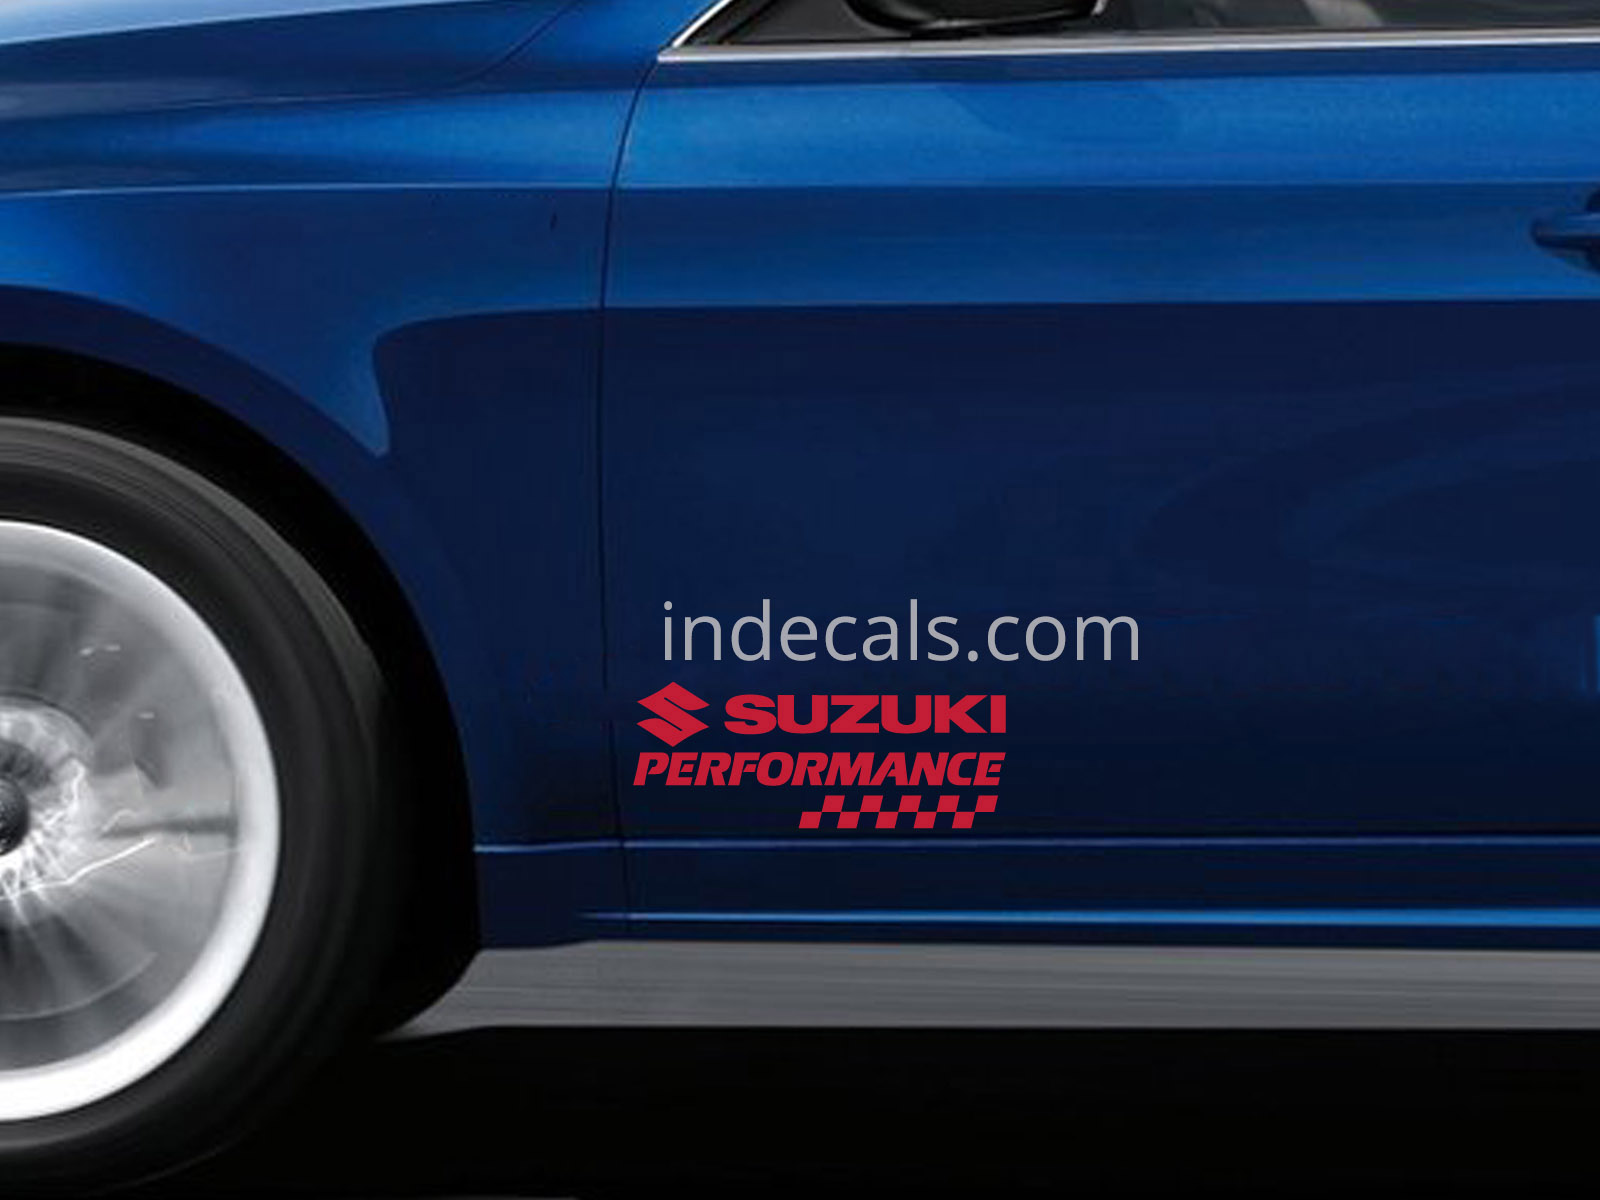 2 x Suzuki Performance Stickers for Doors - Red